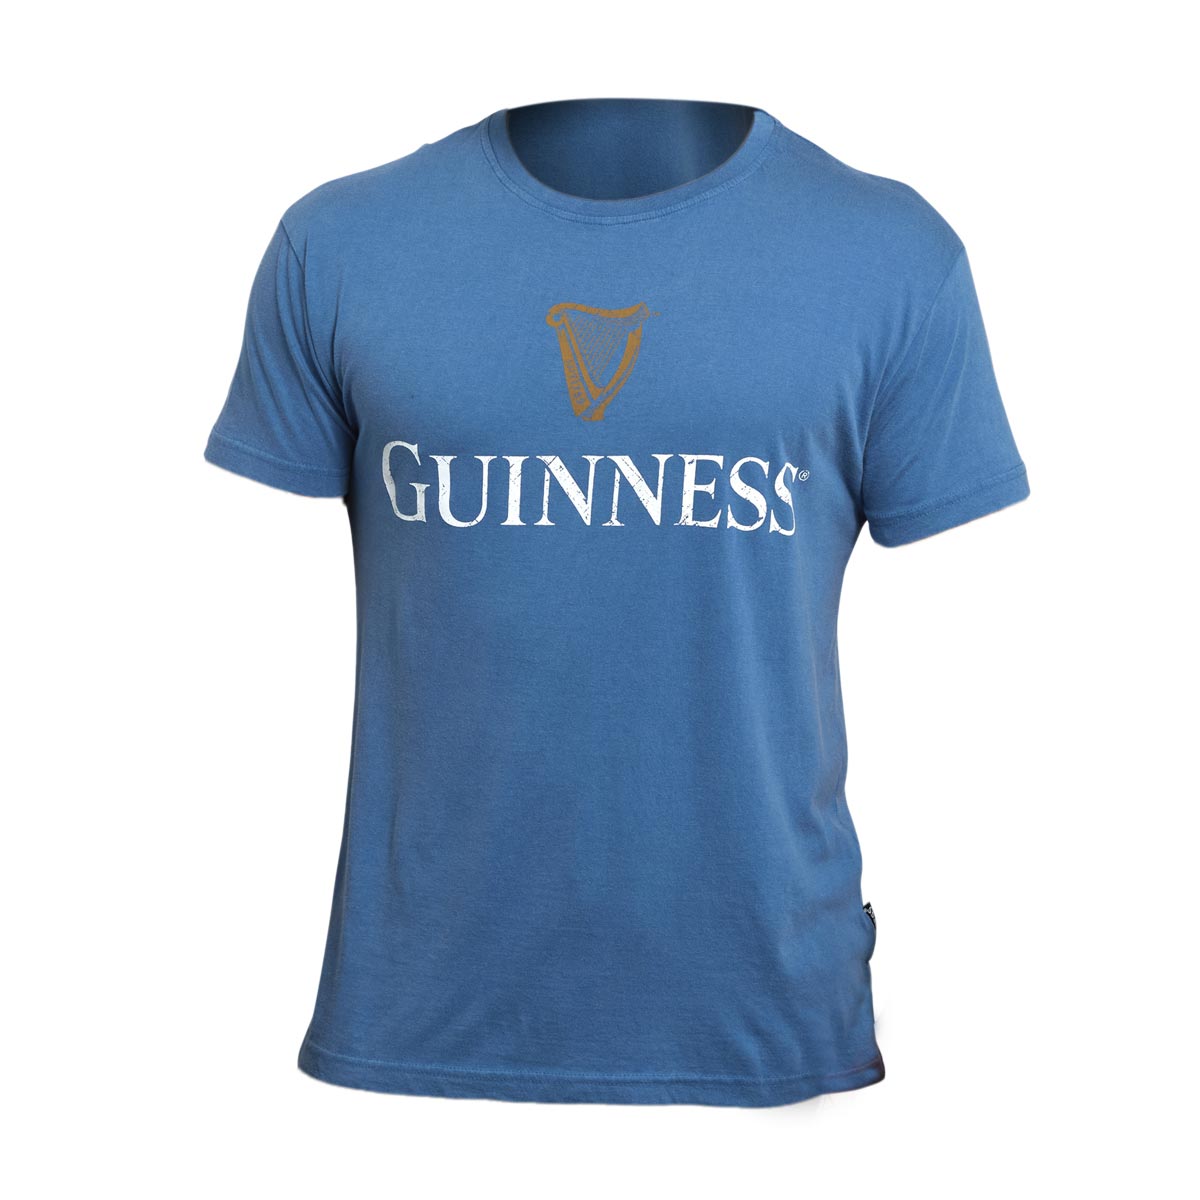 Guinness Trademark Label T-Shirt Blue by Guinness.